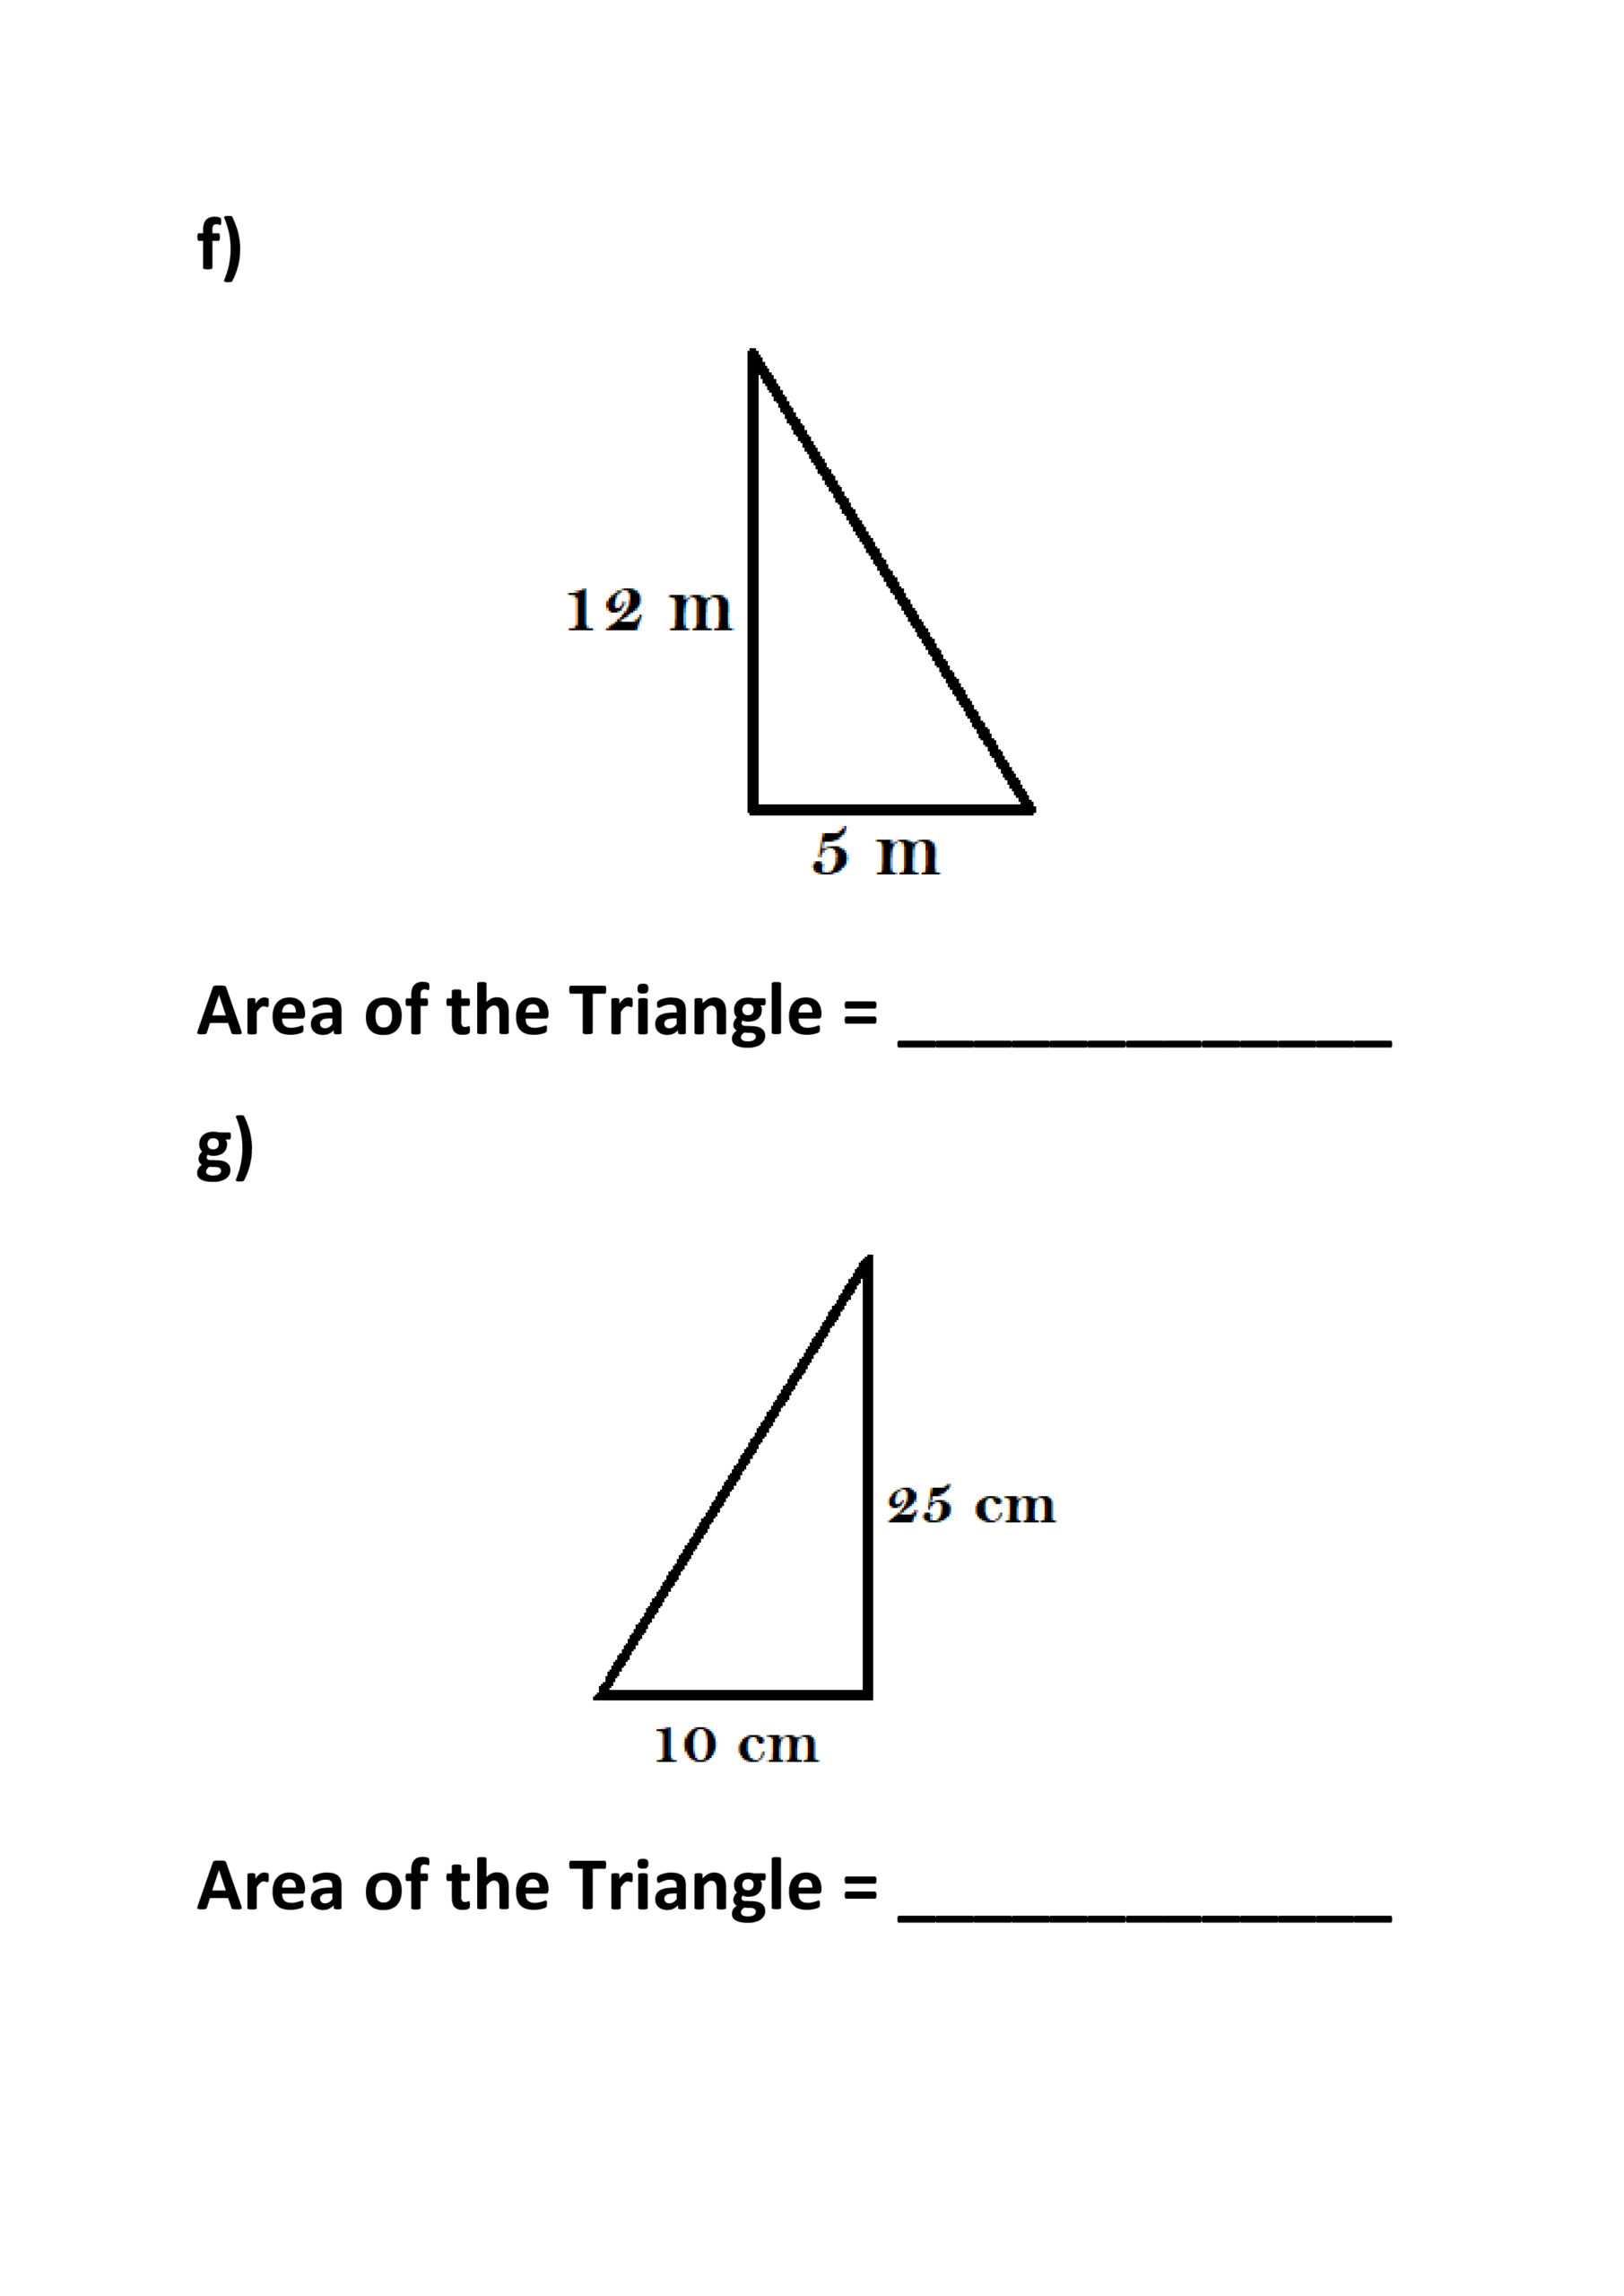 Triangle area worksheet